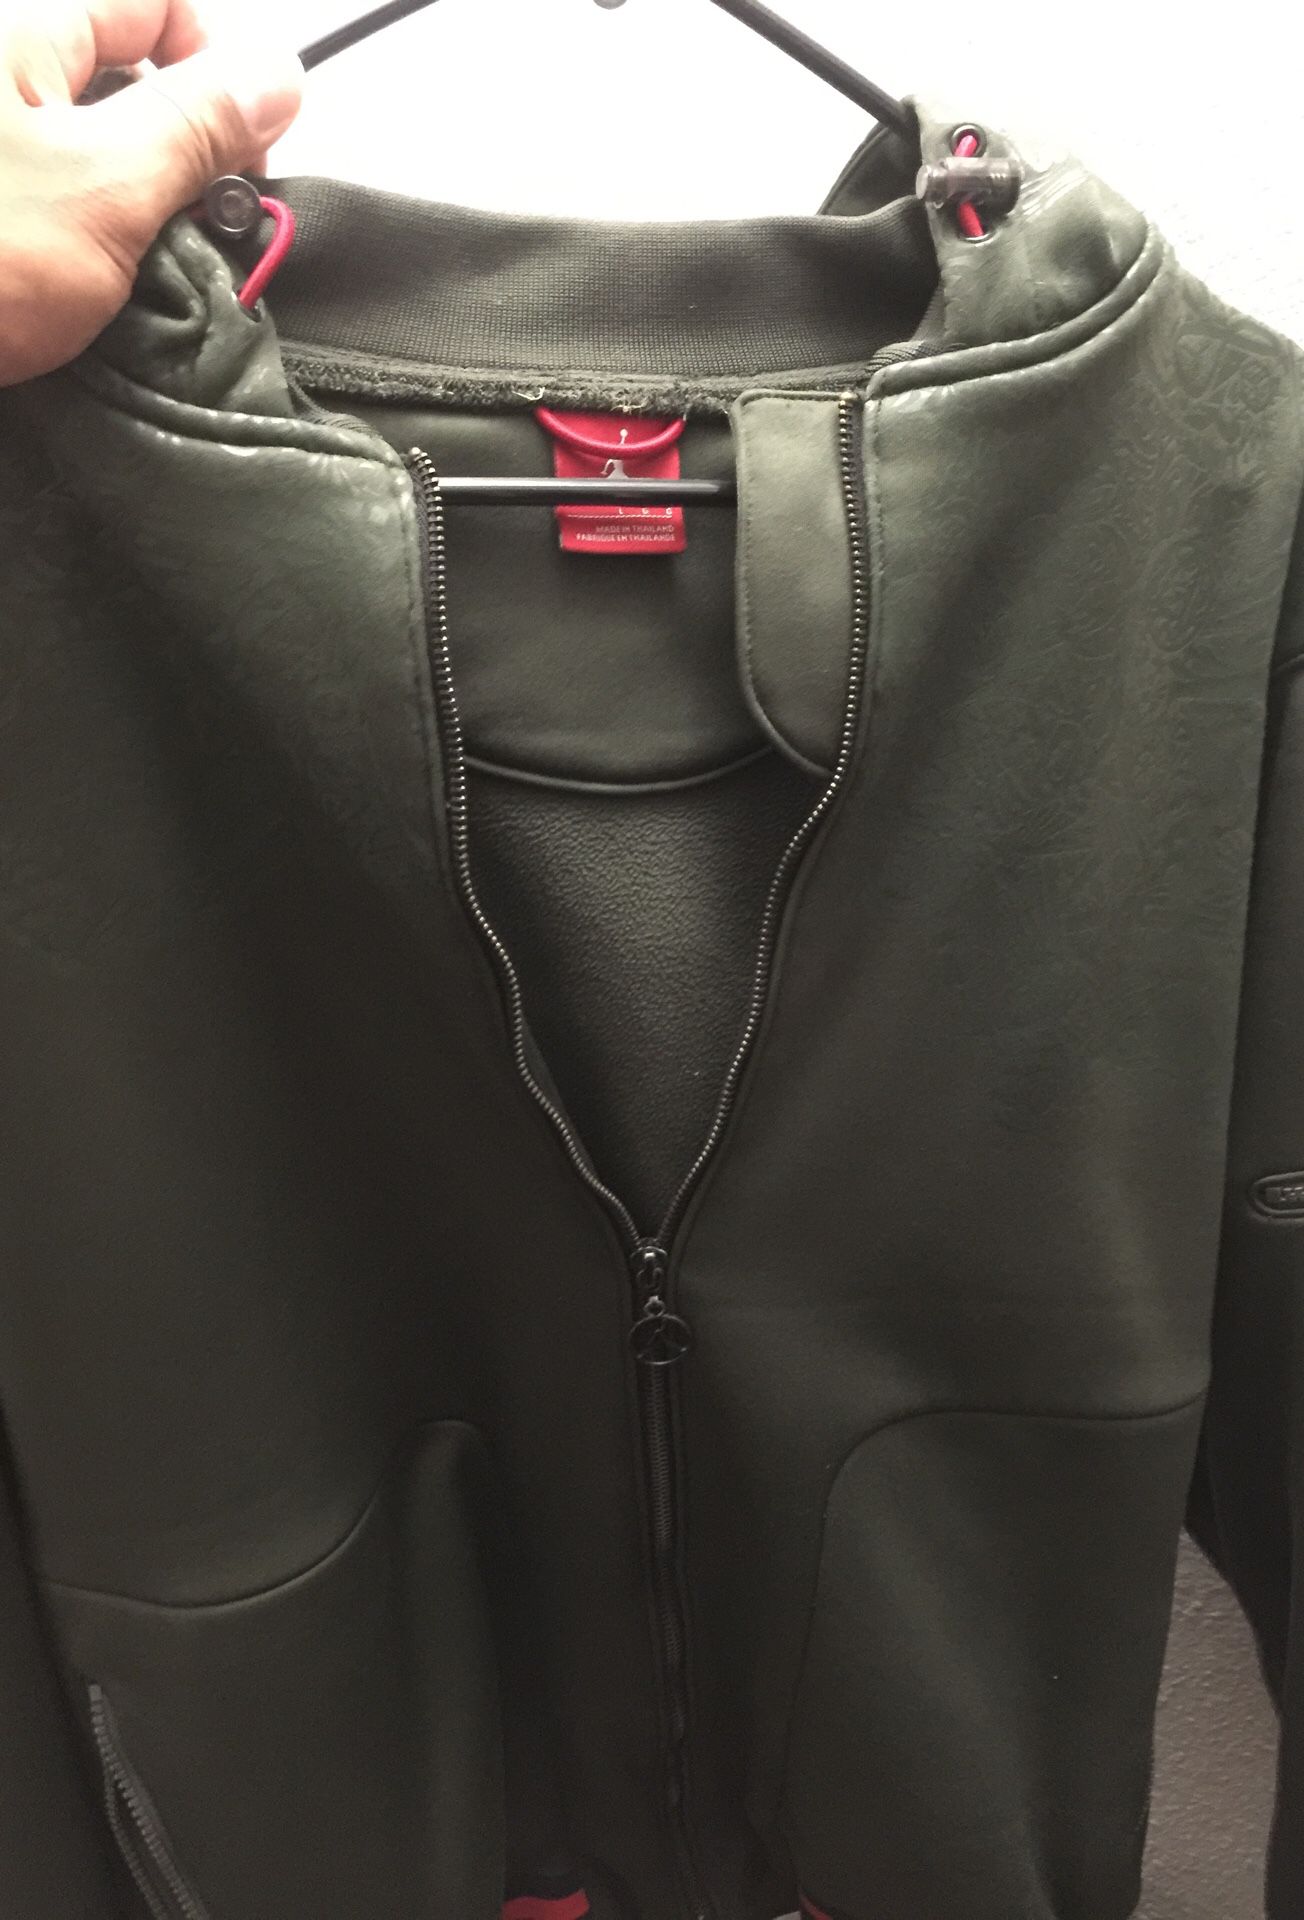 Jordan jacket size large